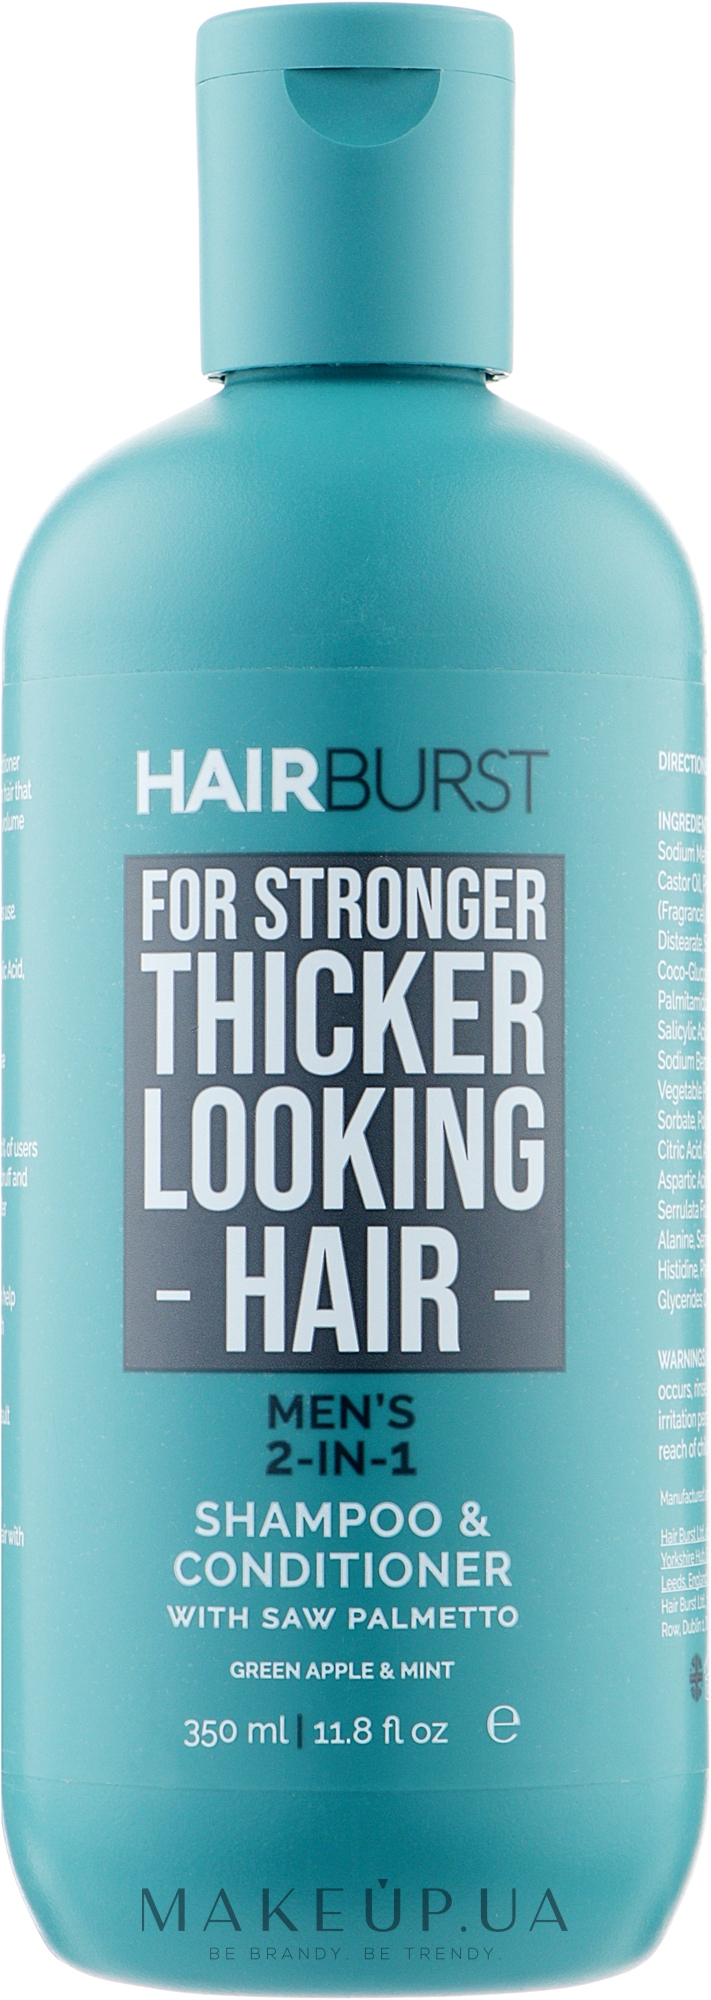 Шампунь и кондиционер для мужчин 2 в 1 - Hairburst Men's 2-In-1 Shampoo & Conditioner — фото 350ml